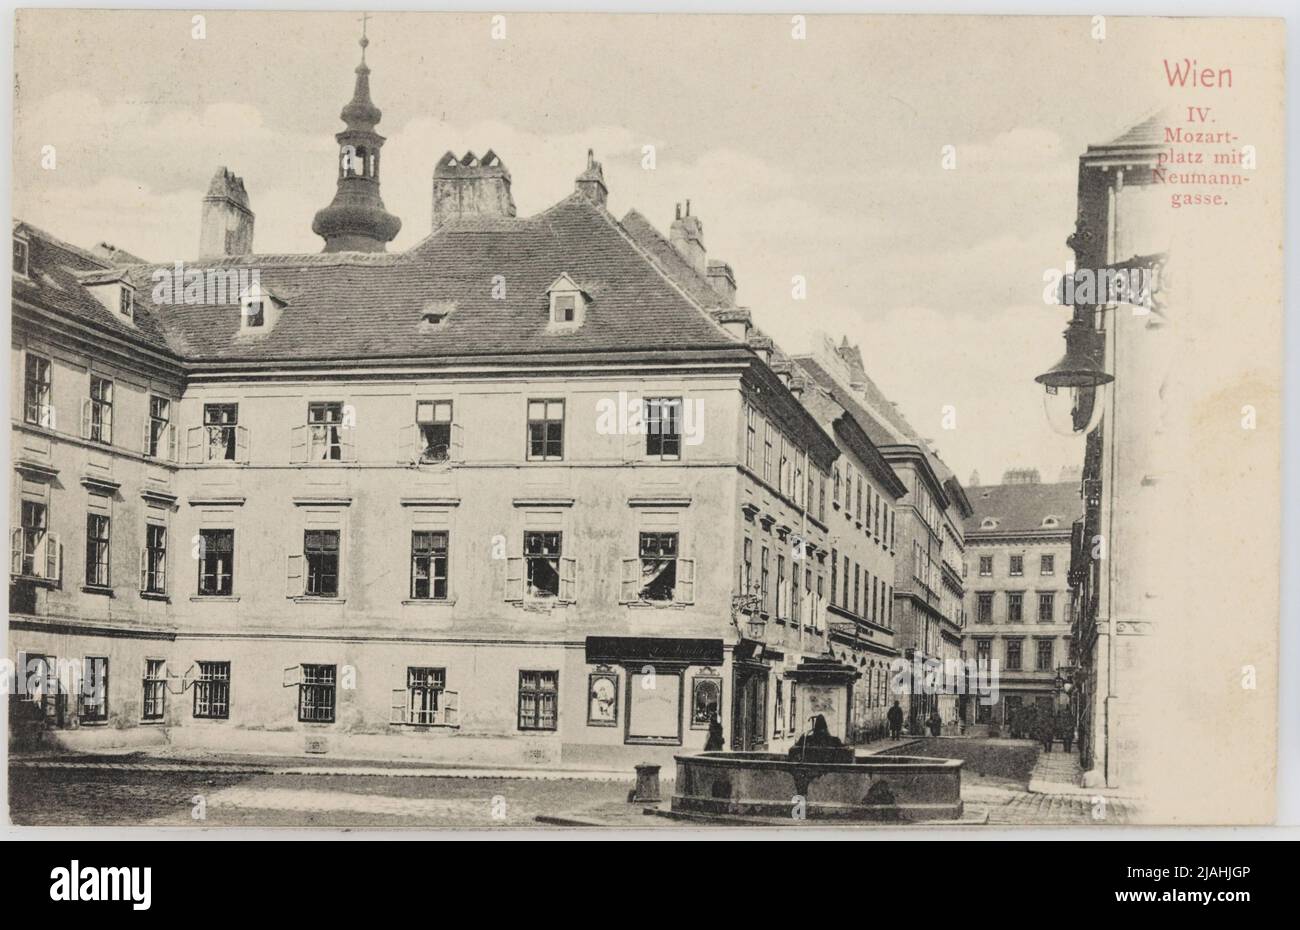 4th, Mozartplatz - con Mozartbrunnen - Vista de Neumanngasse, postal. Sperlings Postkartenverlag (M. M. S.), productor Foto de stock